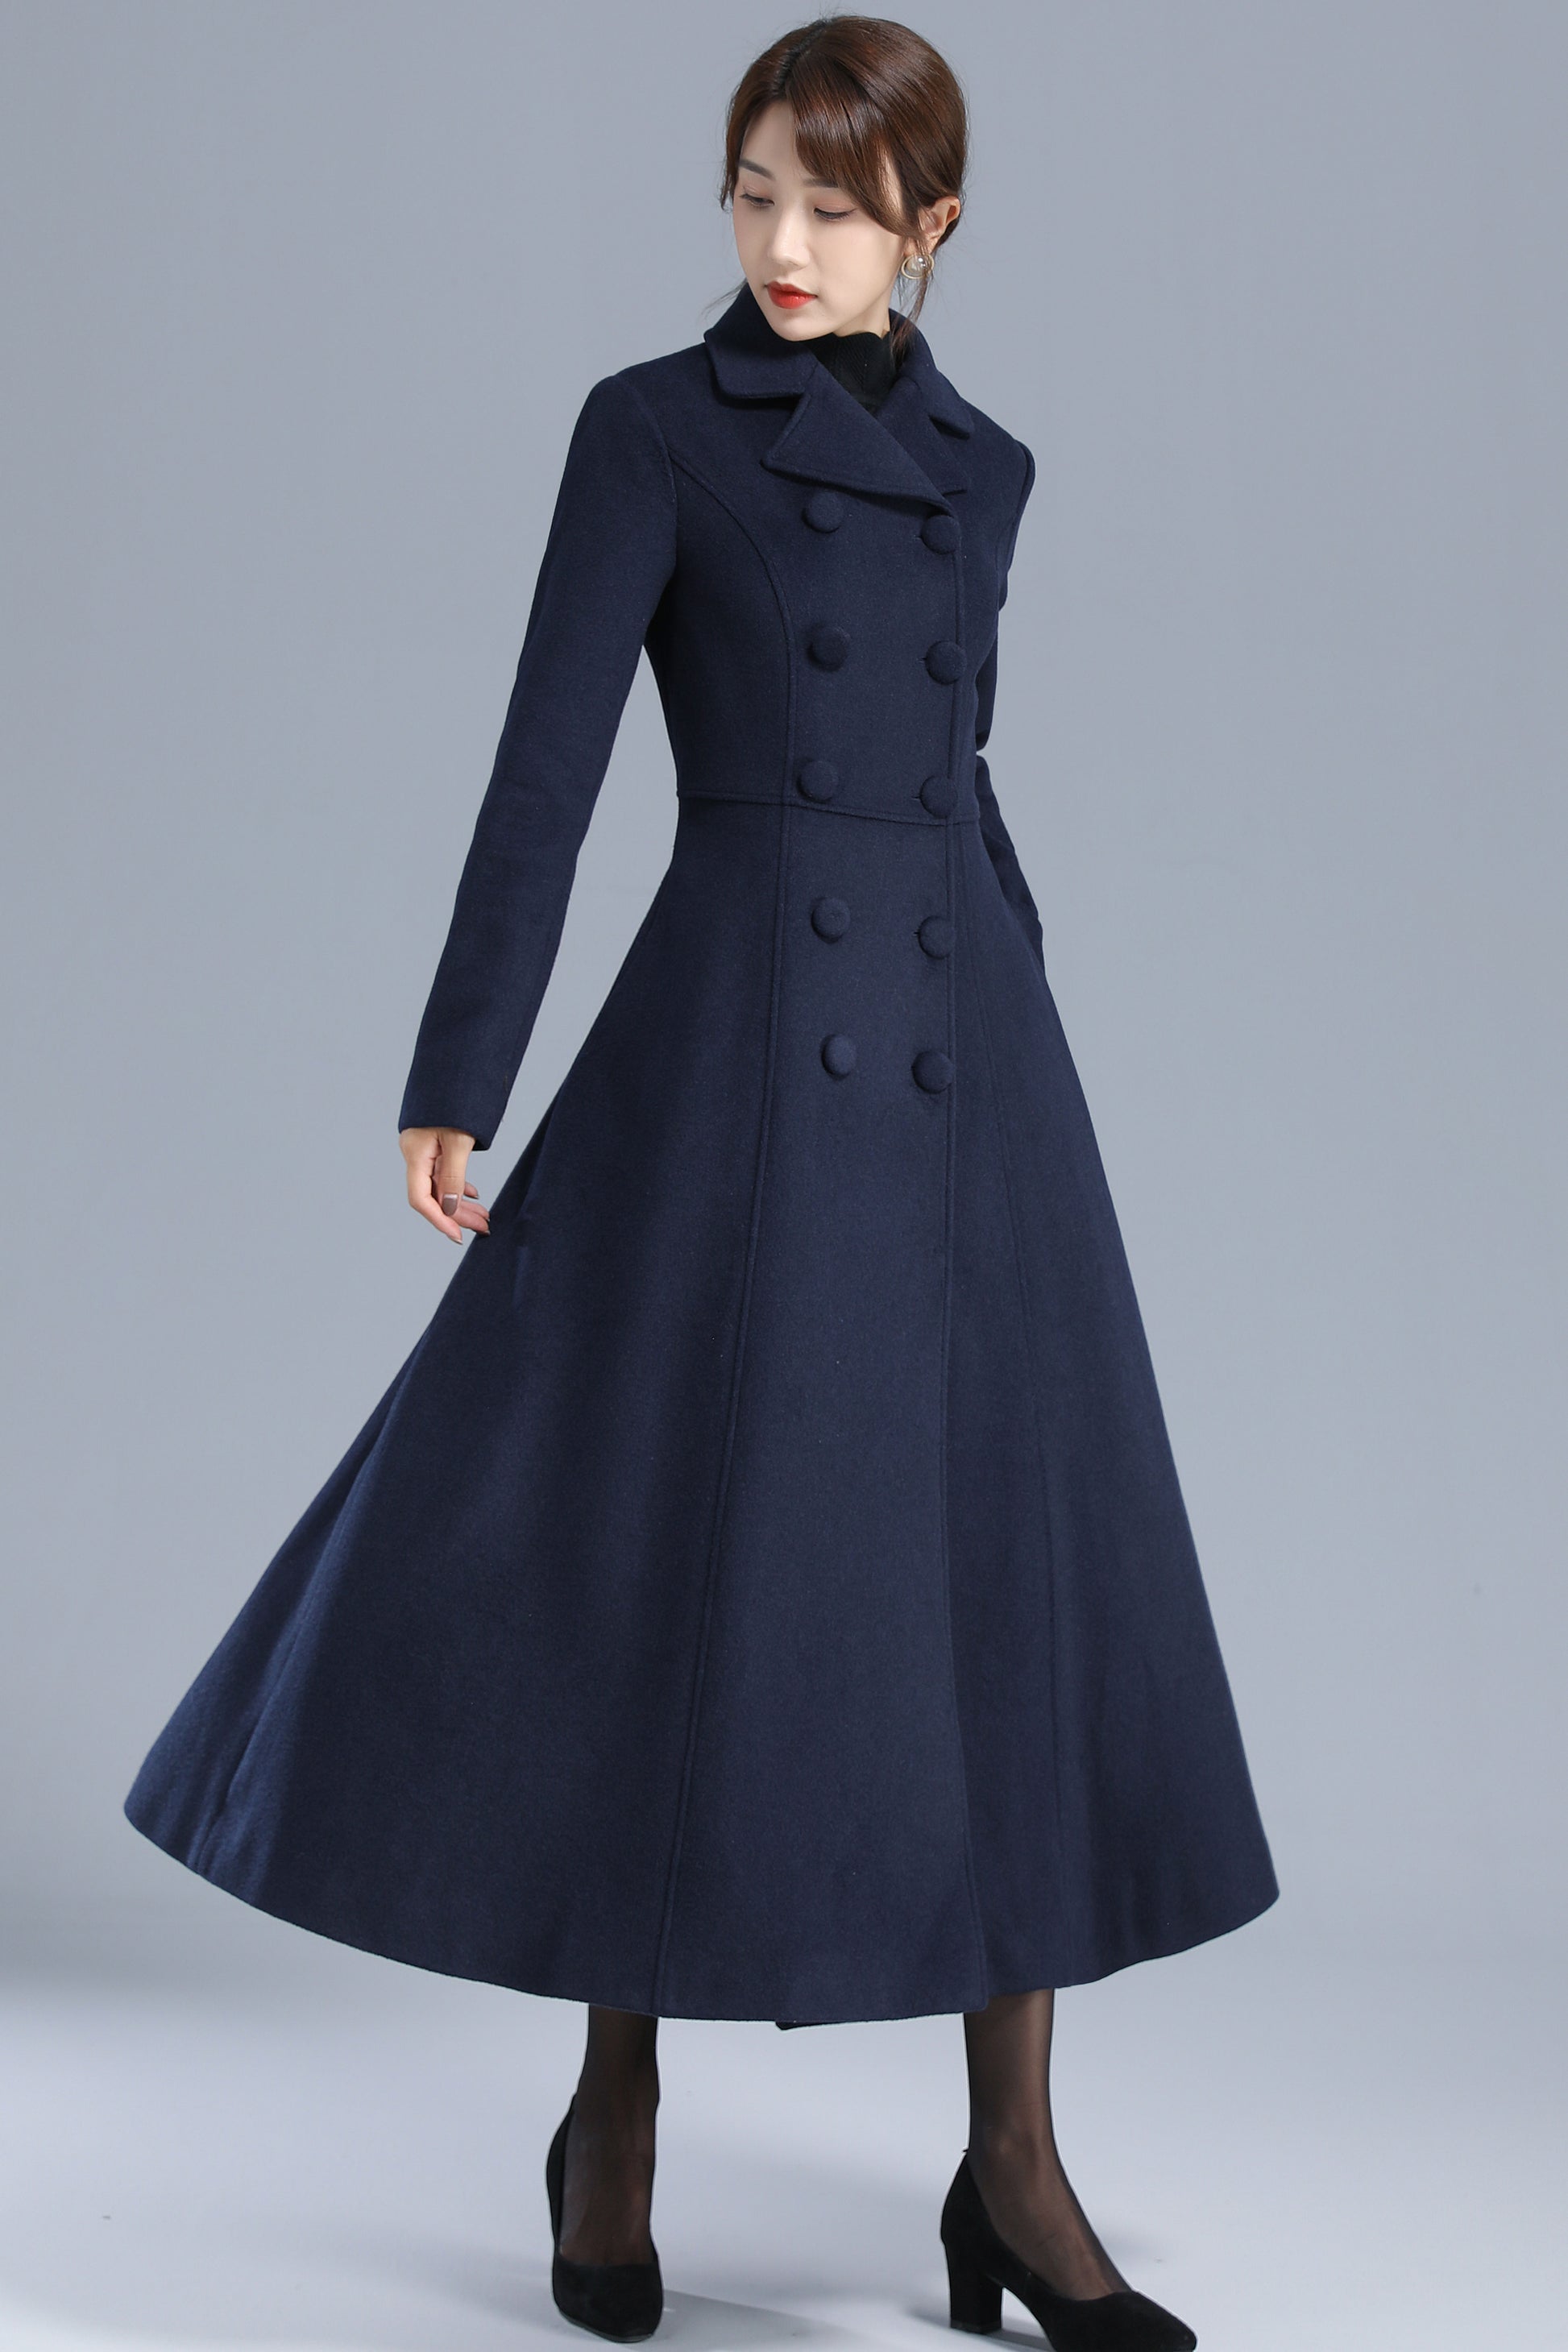 Navy blue coat wool coat warm winter coat midi coat womens,  #xiaolizi  #winterstyle #winter #woolcoat